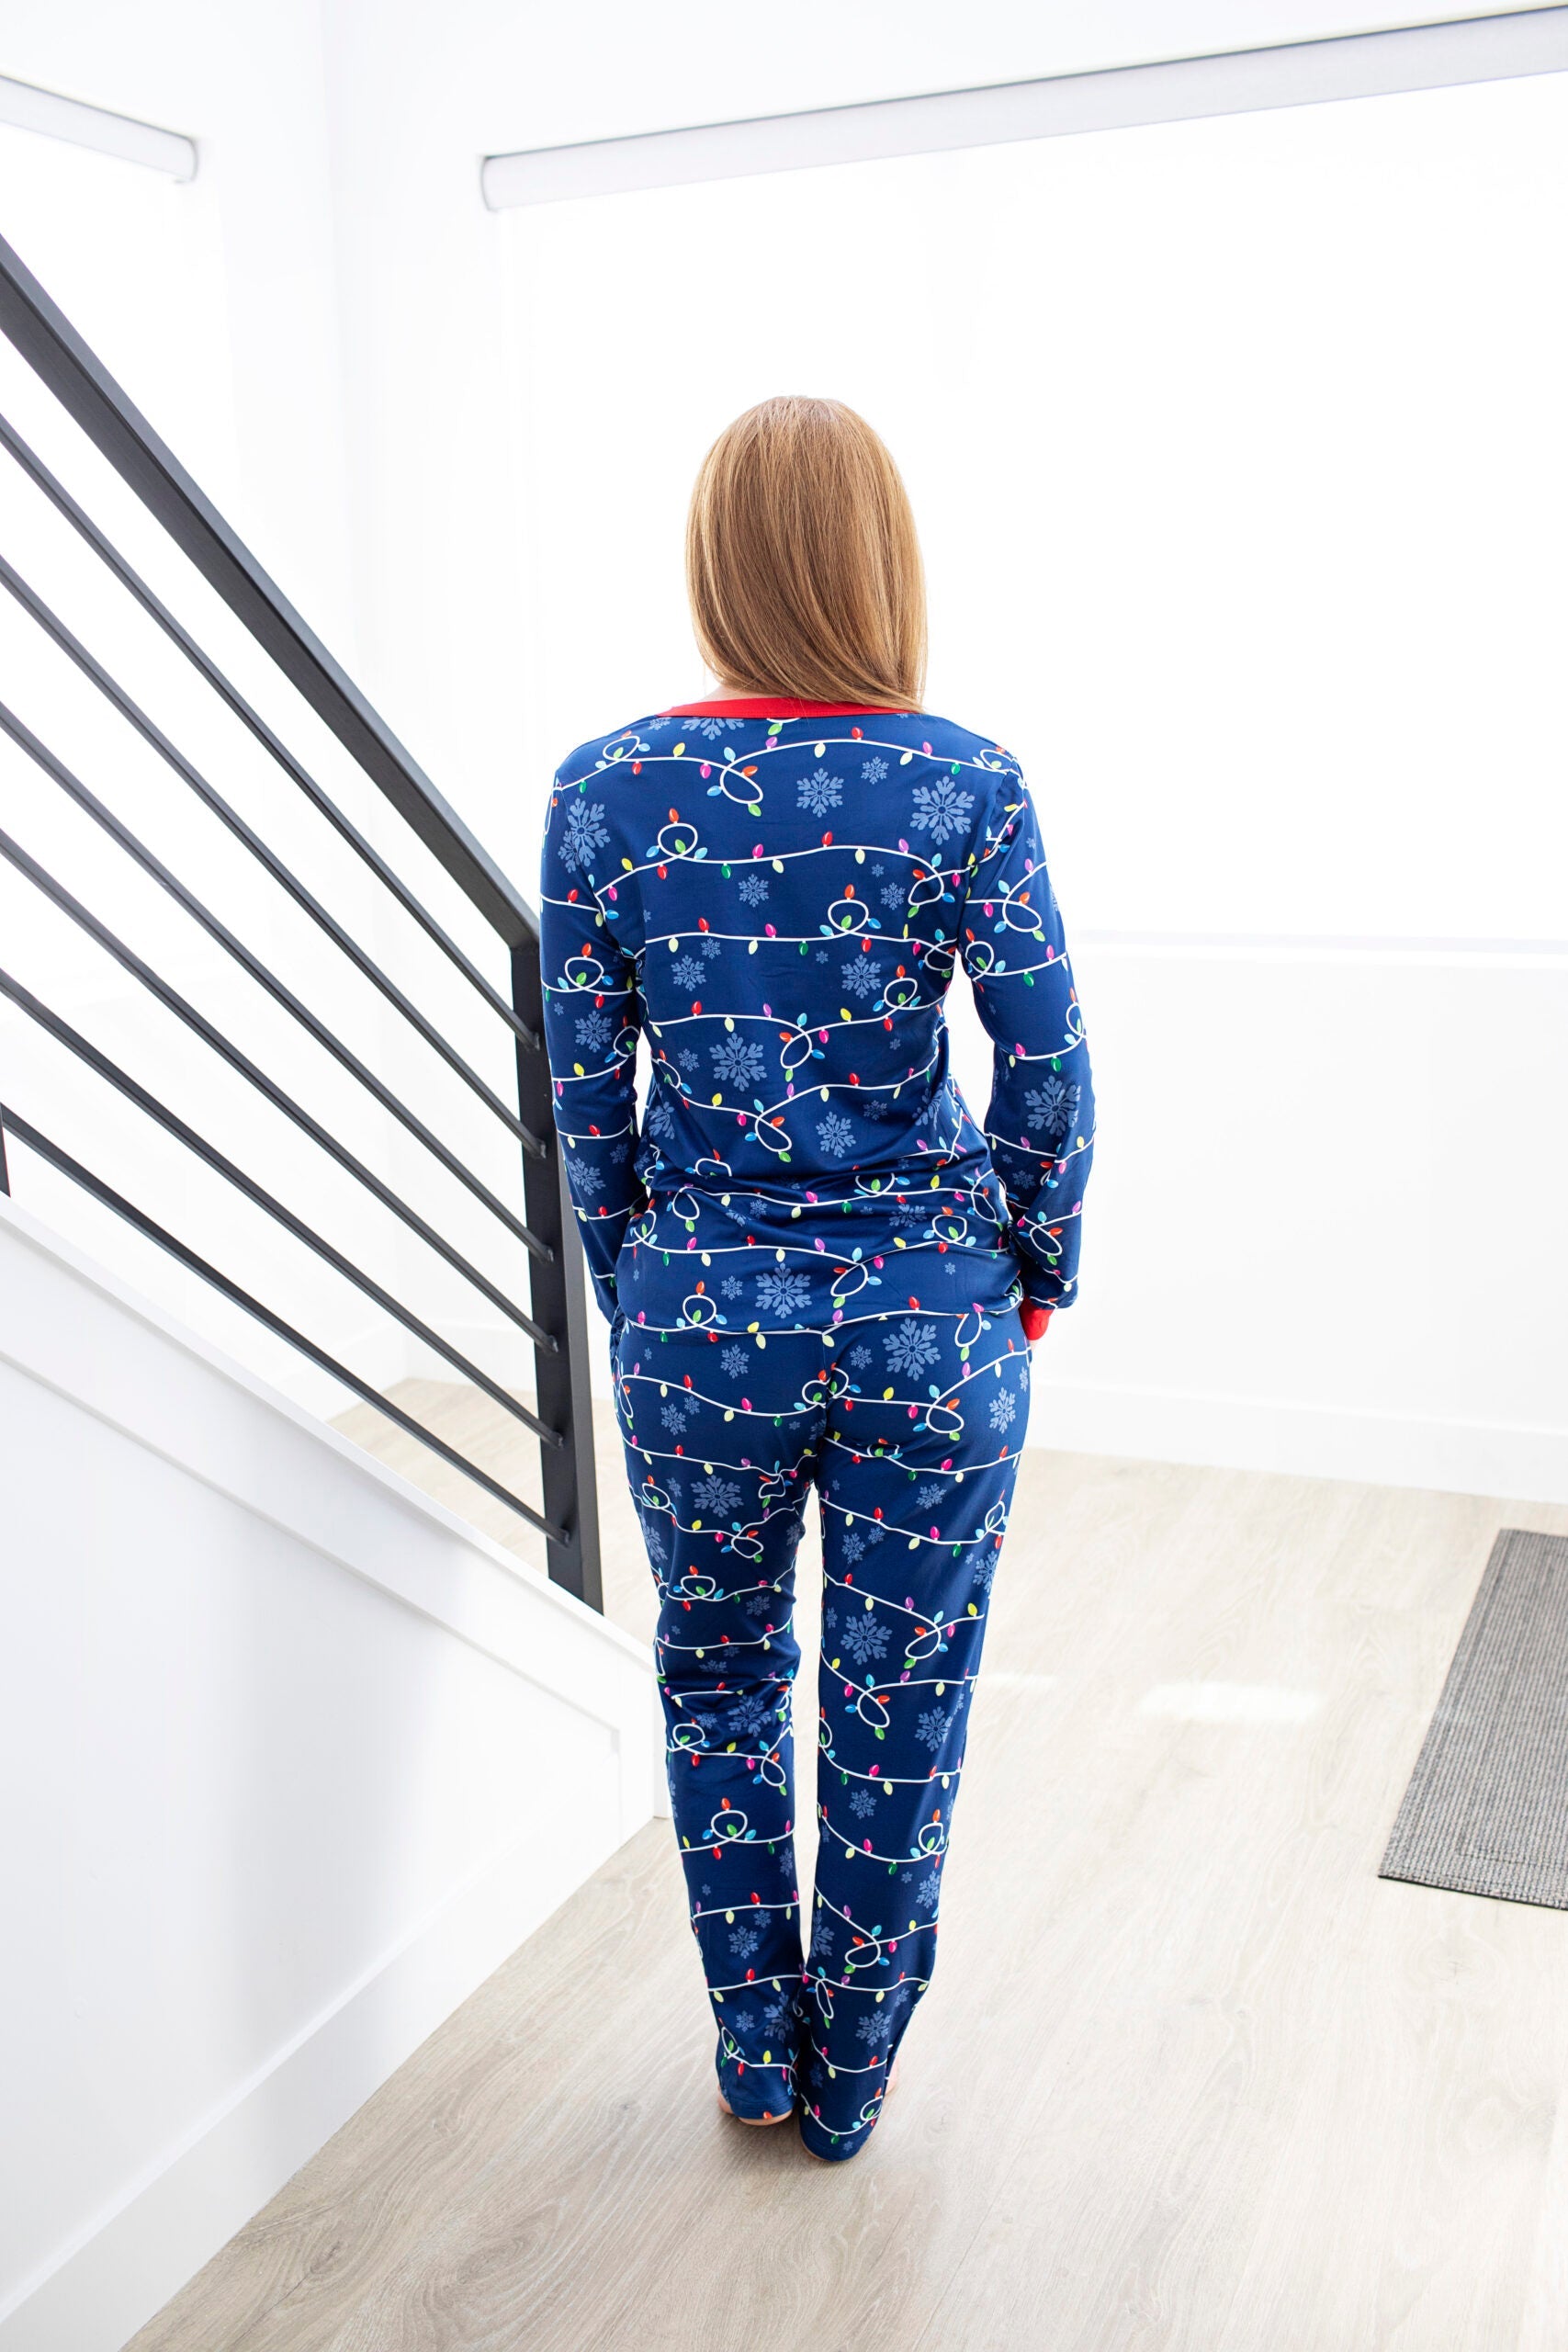 PREORDER: Matching Family Christmas Pajamas In Christmas Lights